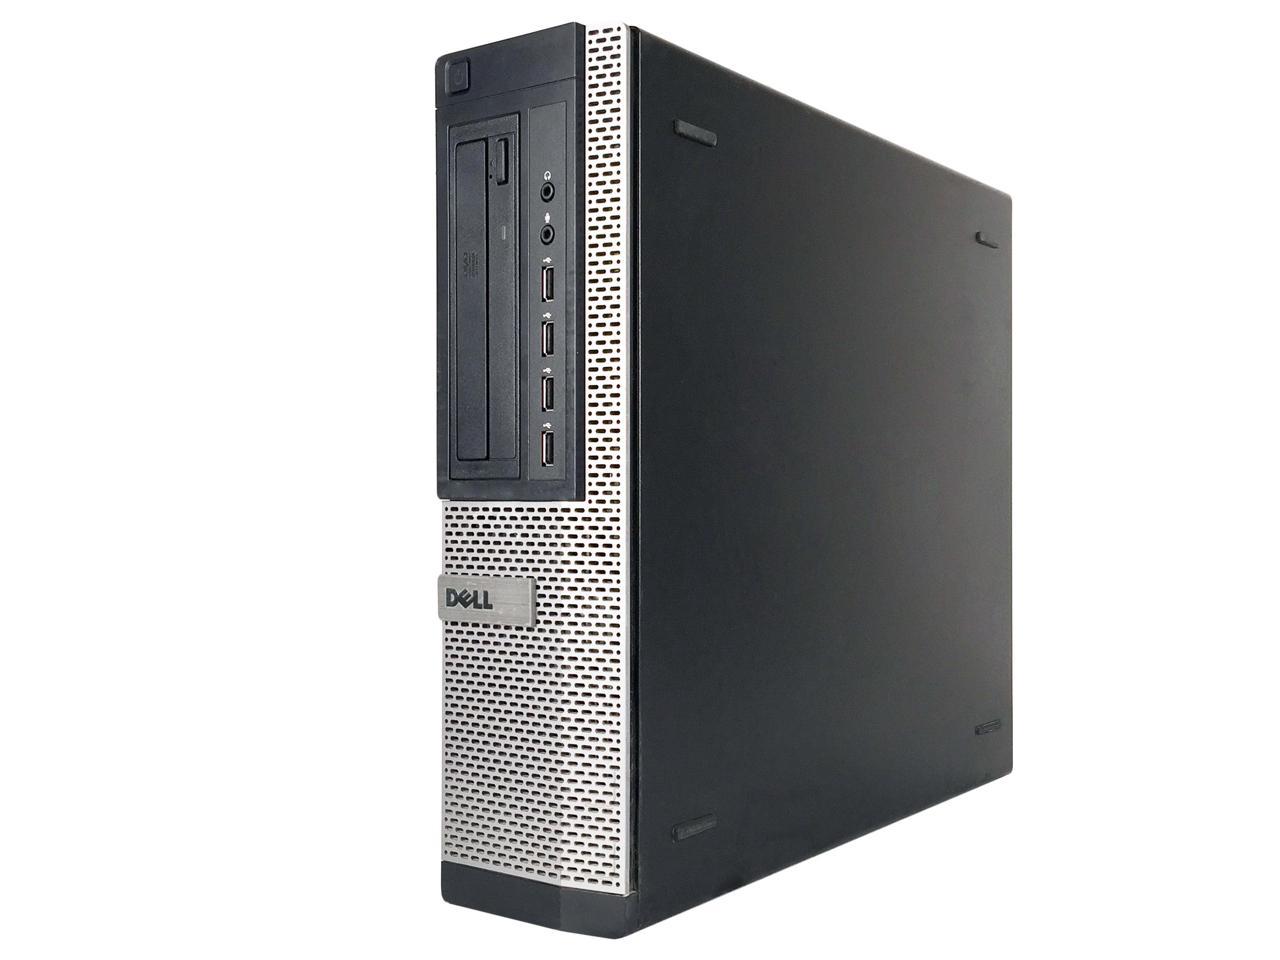 Refurbished Dell Grade A OptiPlex 990 Desktop Computer, Intel Core I5-2500 (3.3 GHz), 16G DDR3, 120G SSD, DVD, Windows 10 Home 64-bit (English/Spanish), 1 Year Warranty